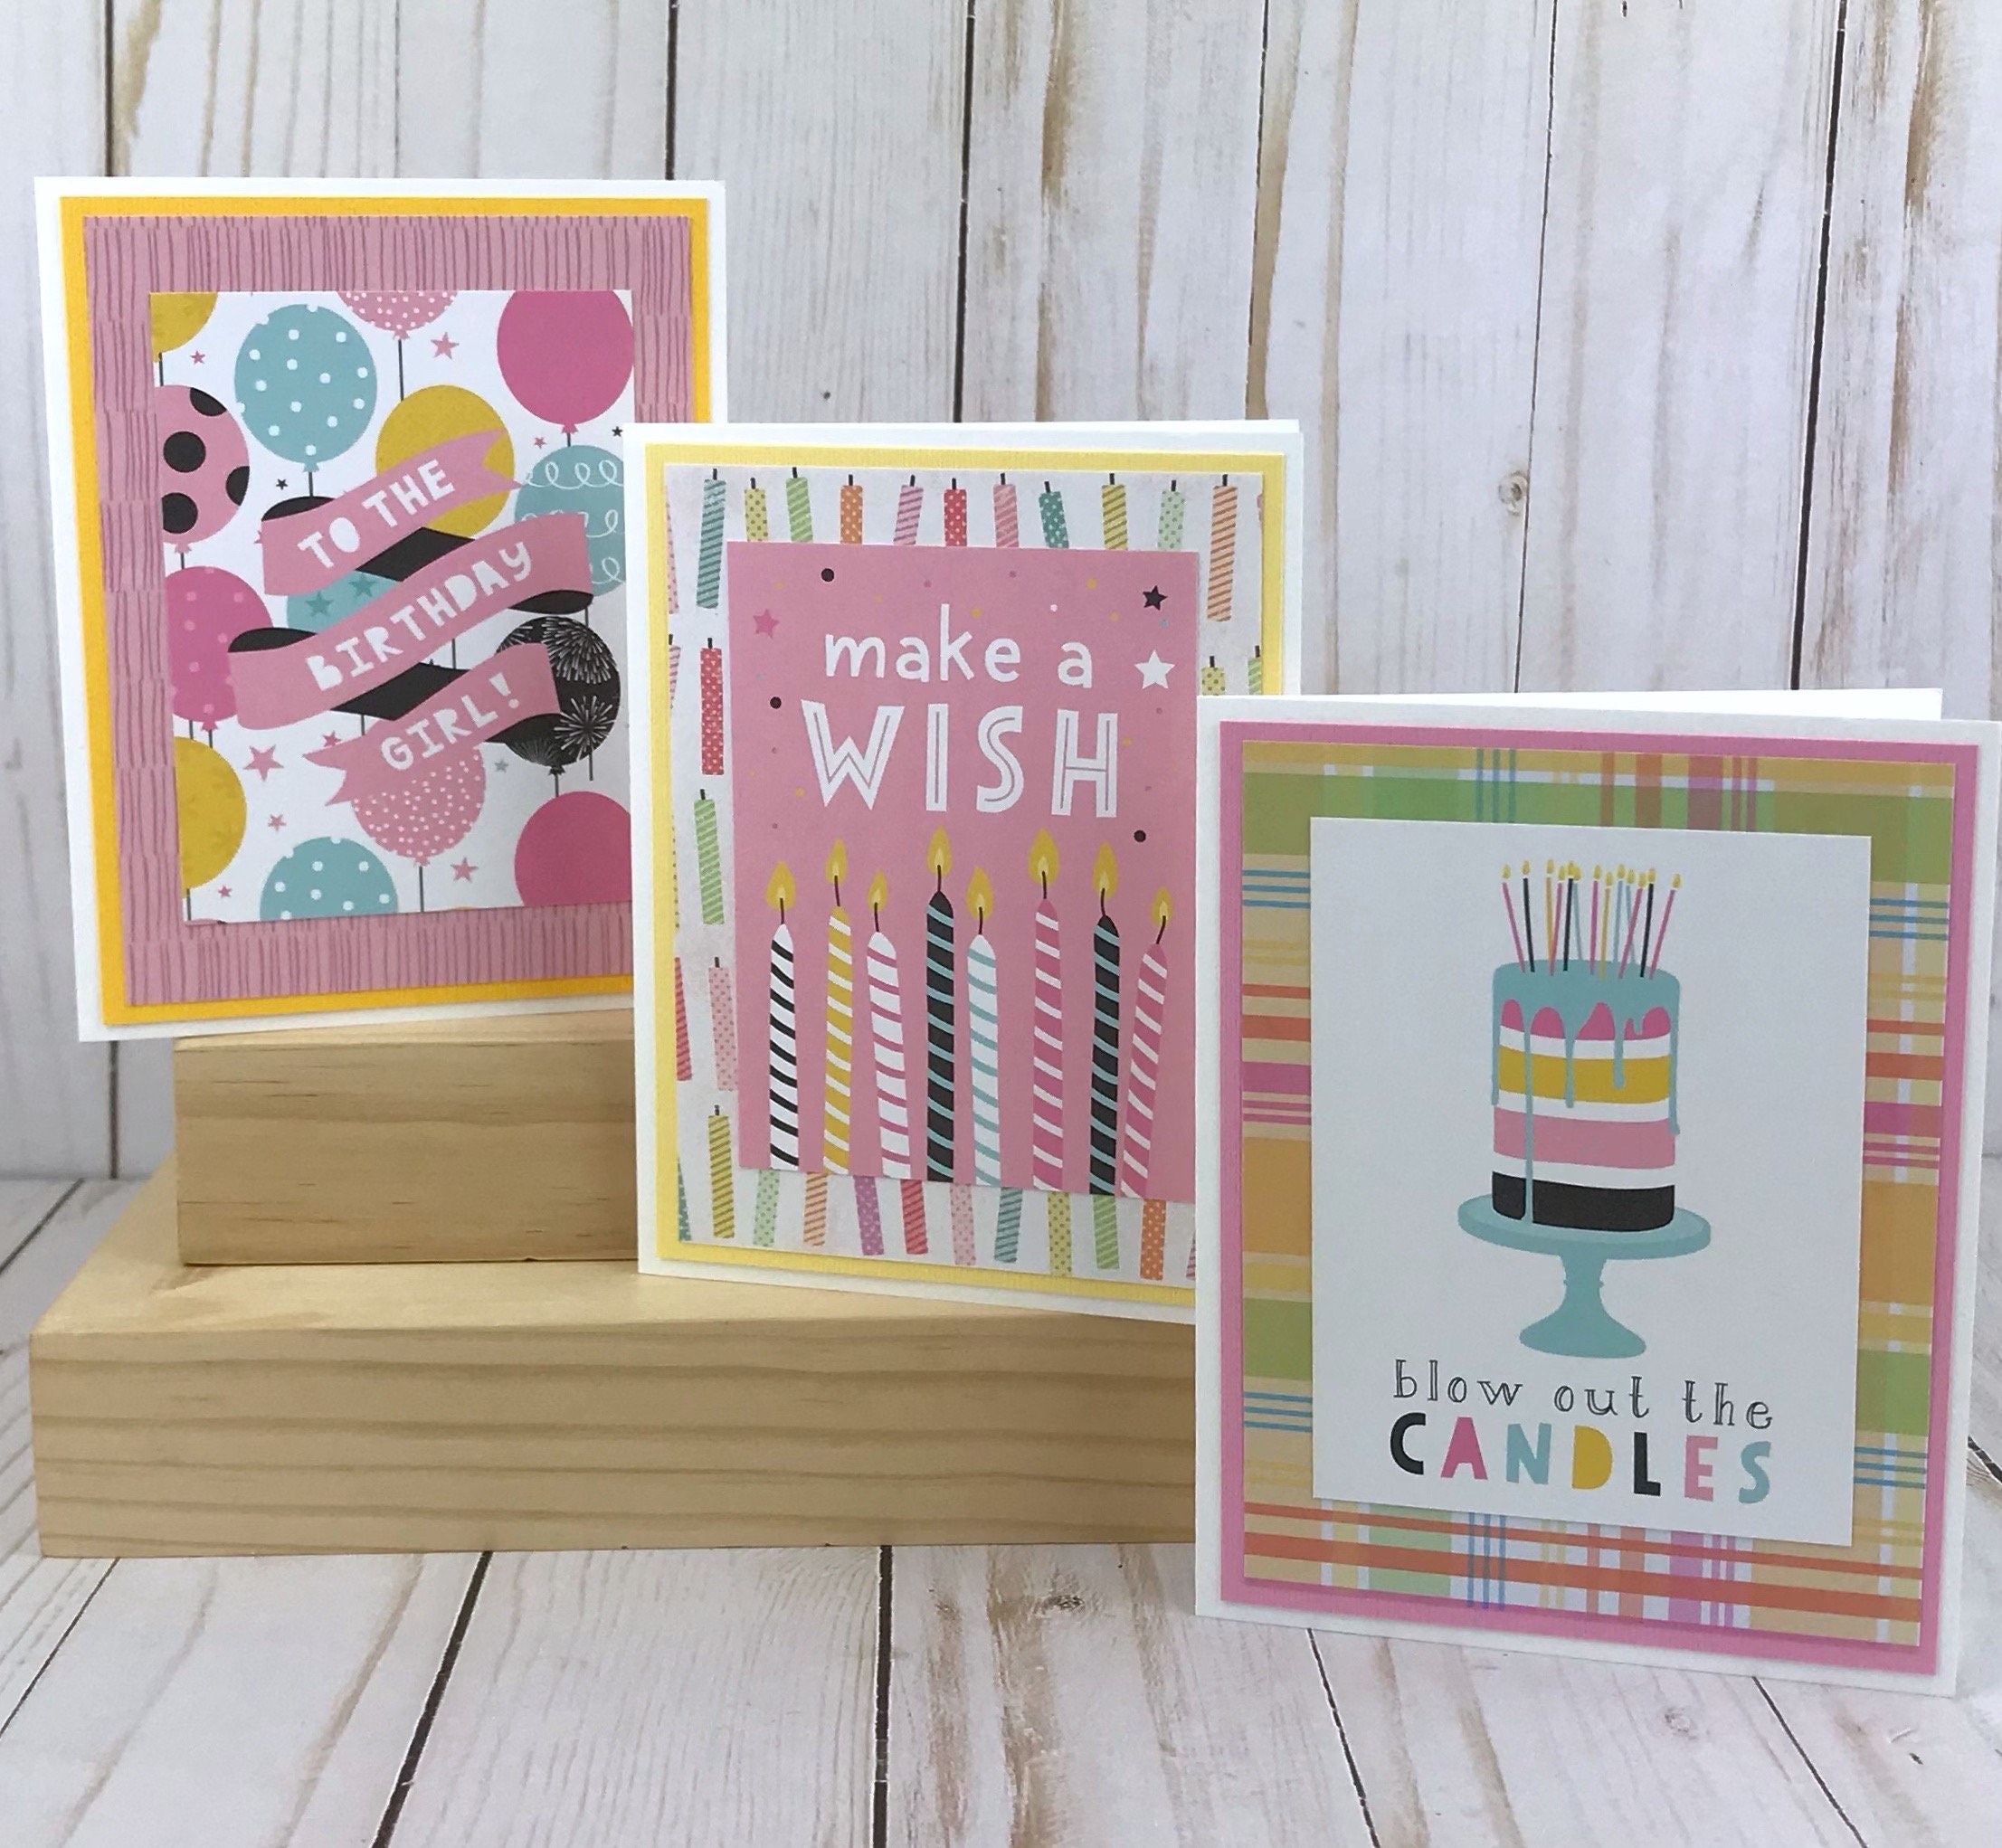 20 Homemade DIY Birthday Card Ideas - Suite 101